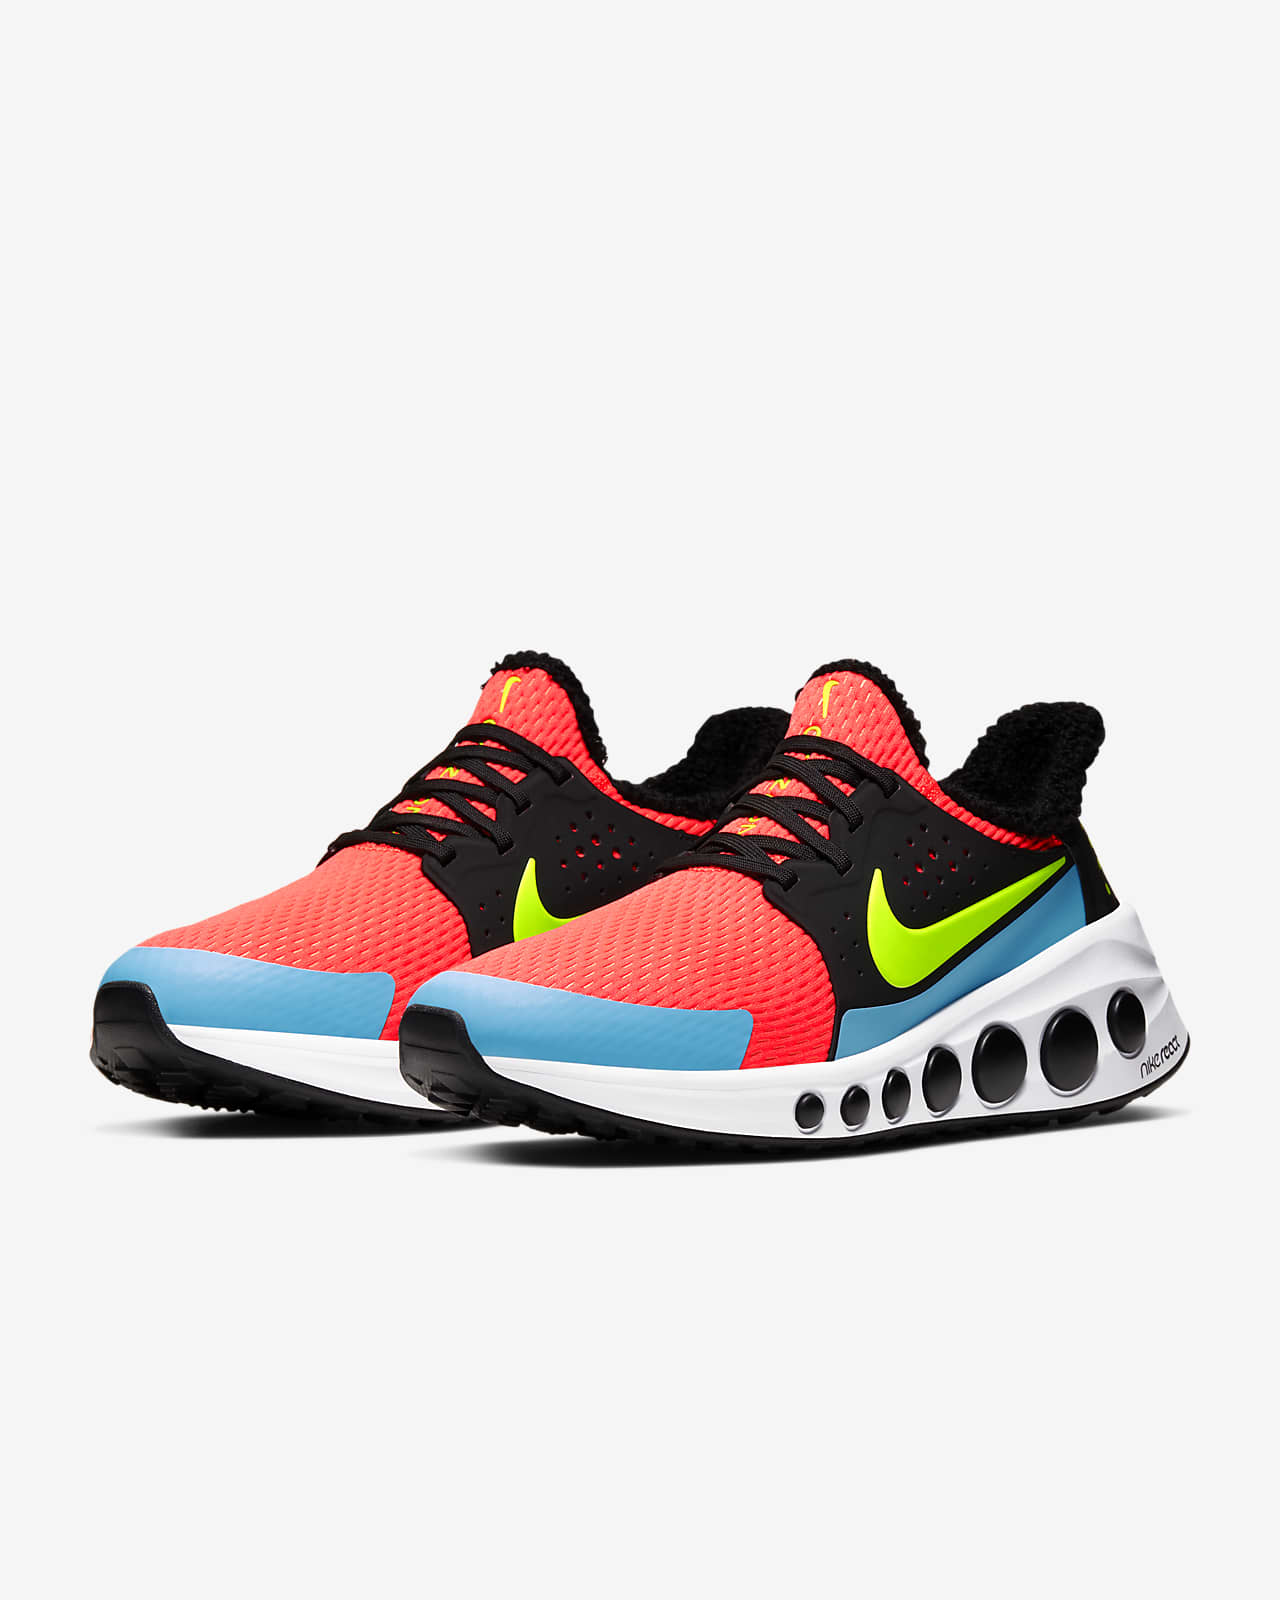 Nike CruzrOne (Bright Crimson) Shoe 